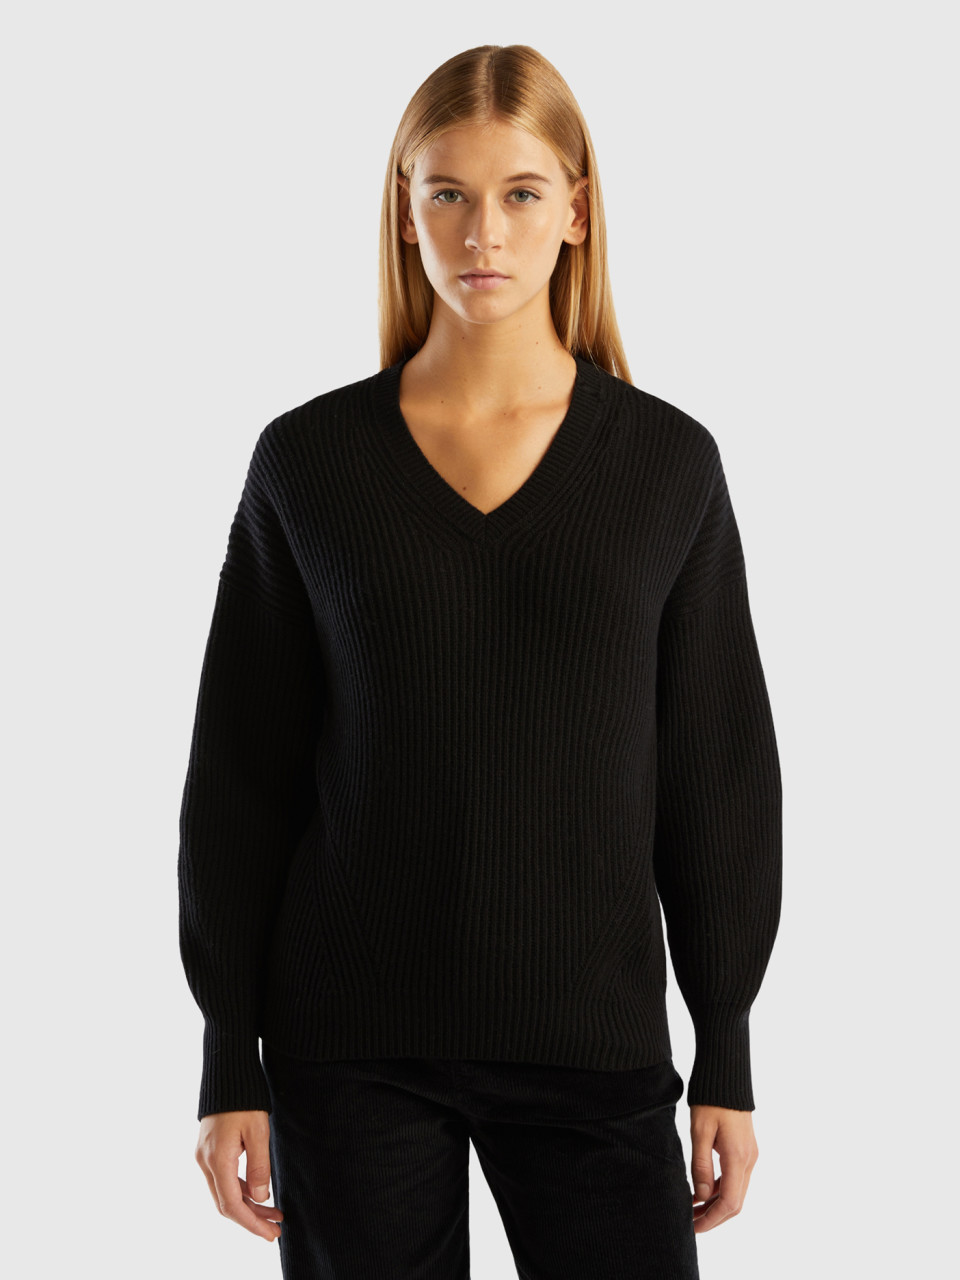 Benetton, Soft Sweater With V-neck, Black, Women